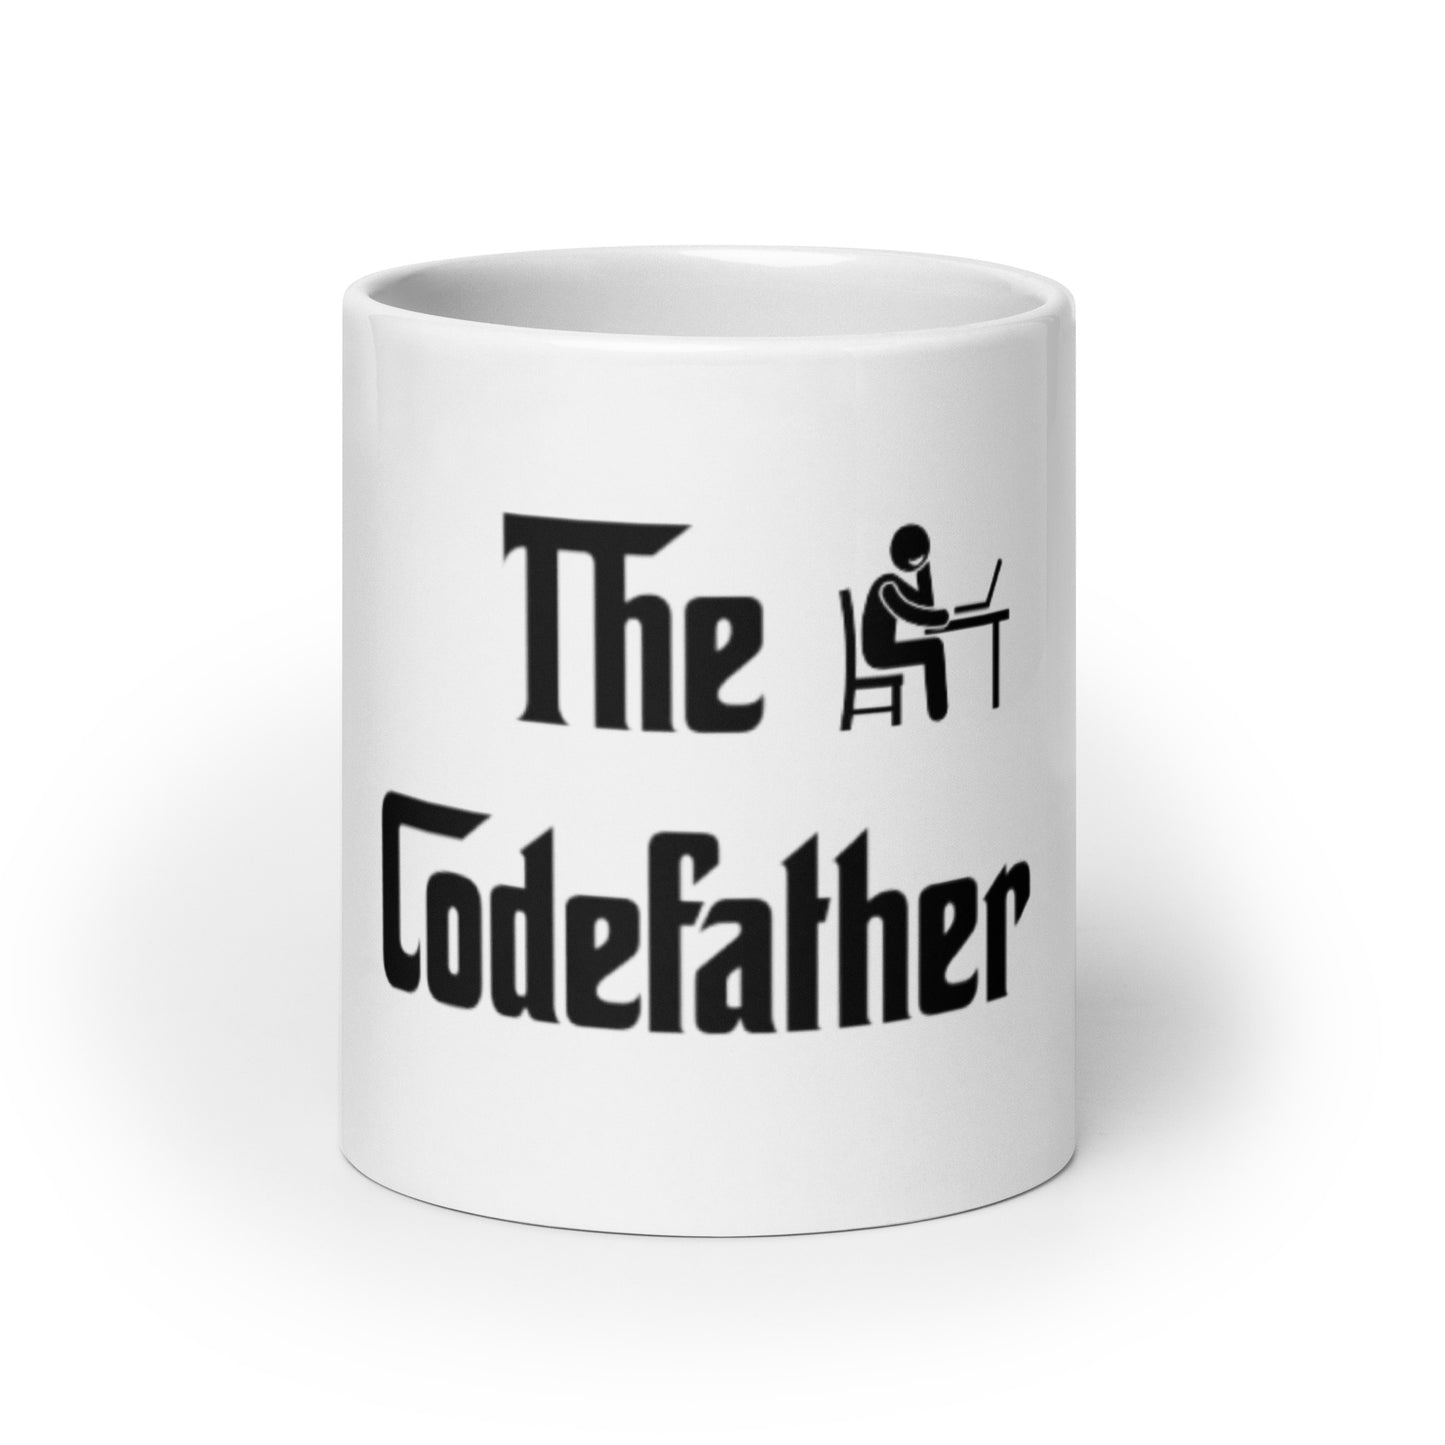 Codefather glossy mug